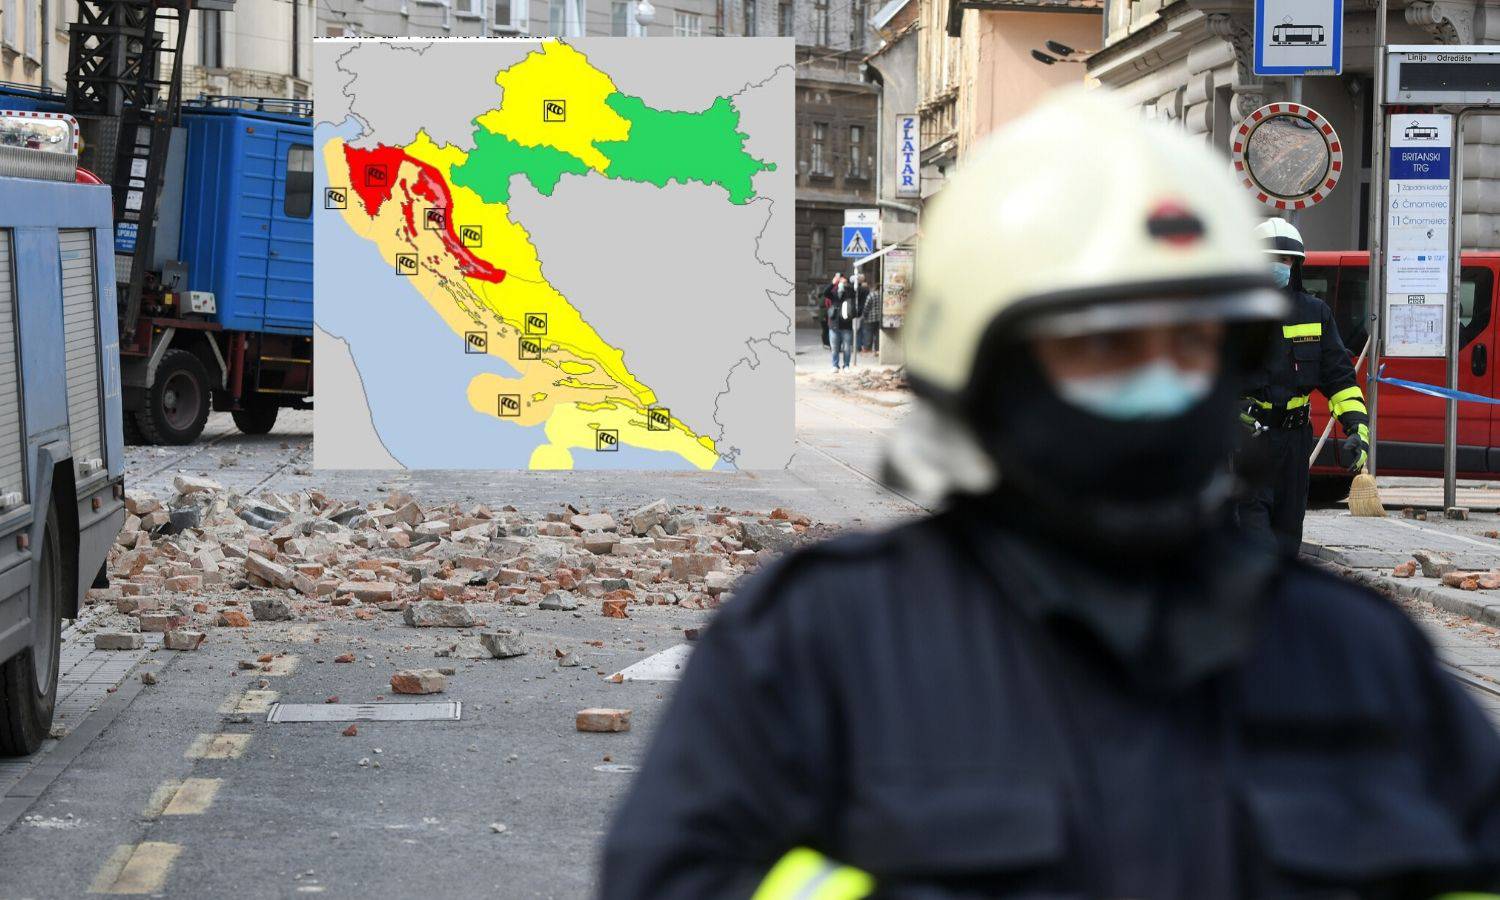 Nakon potresa, stiže jak vjetar: Meteoalarm upozorava Zagreb